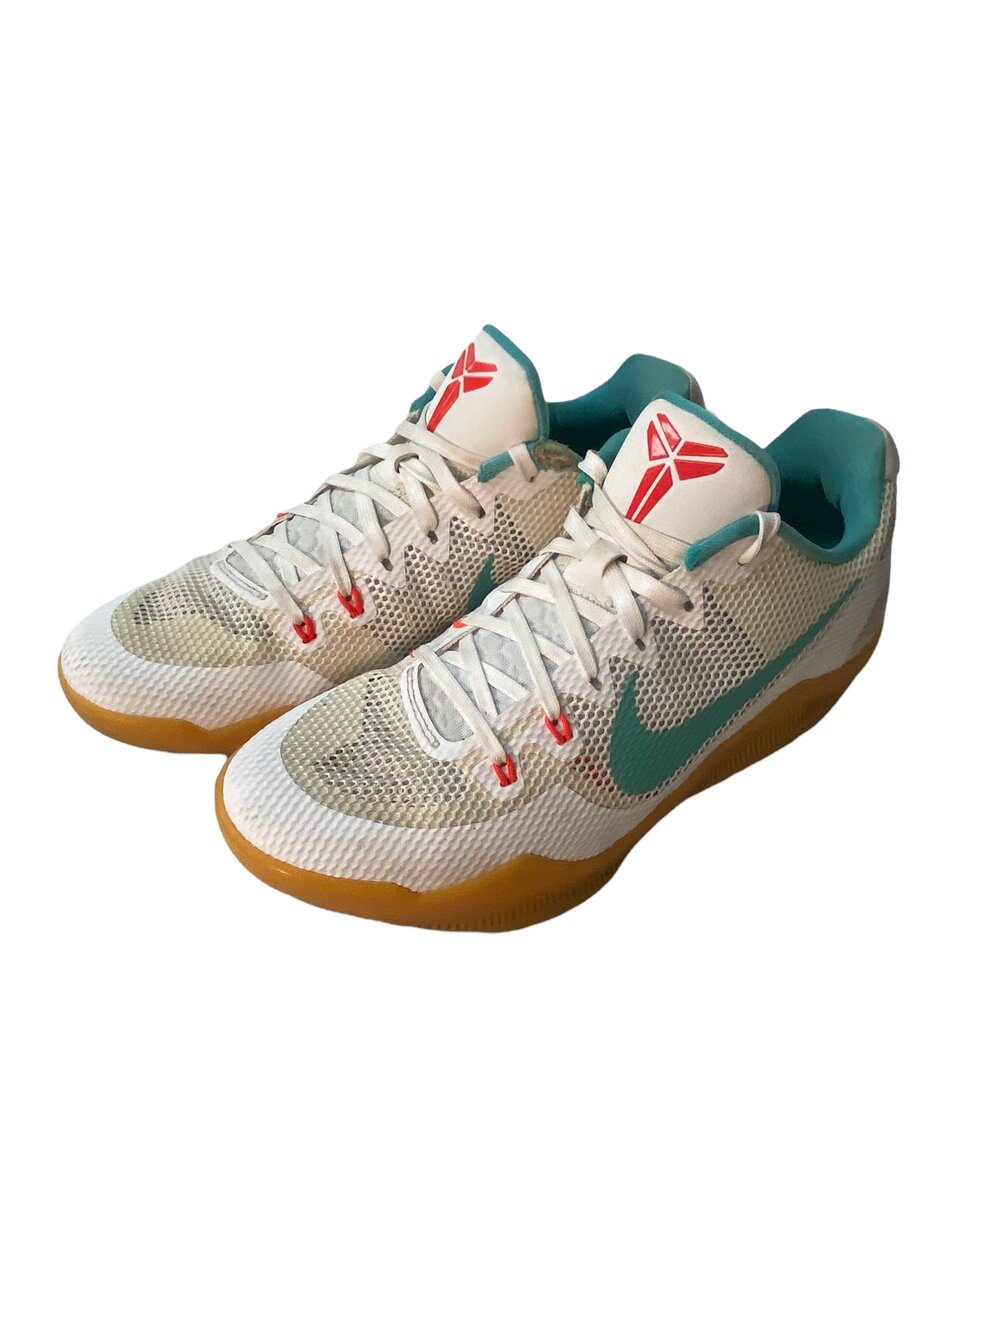 Nike Kobe 11 EM 'Summer' Sneakers, Men's Size 10 — Mercer Island 